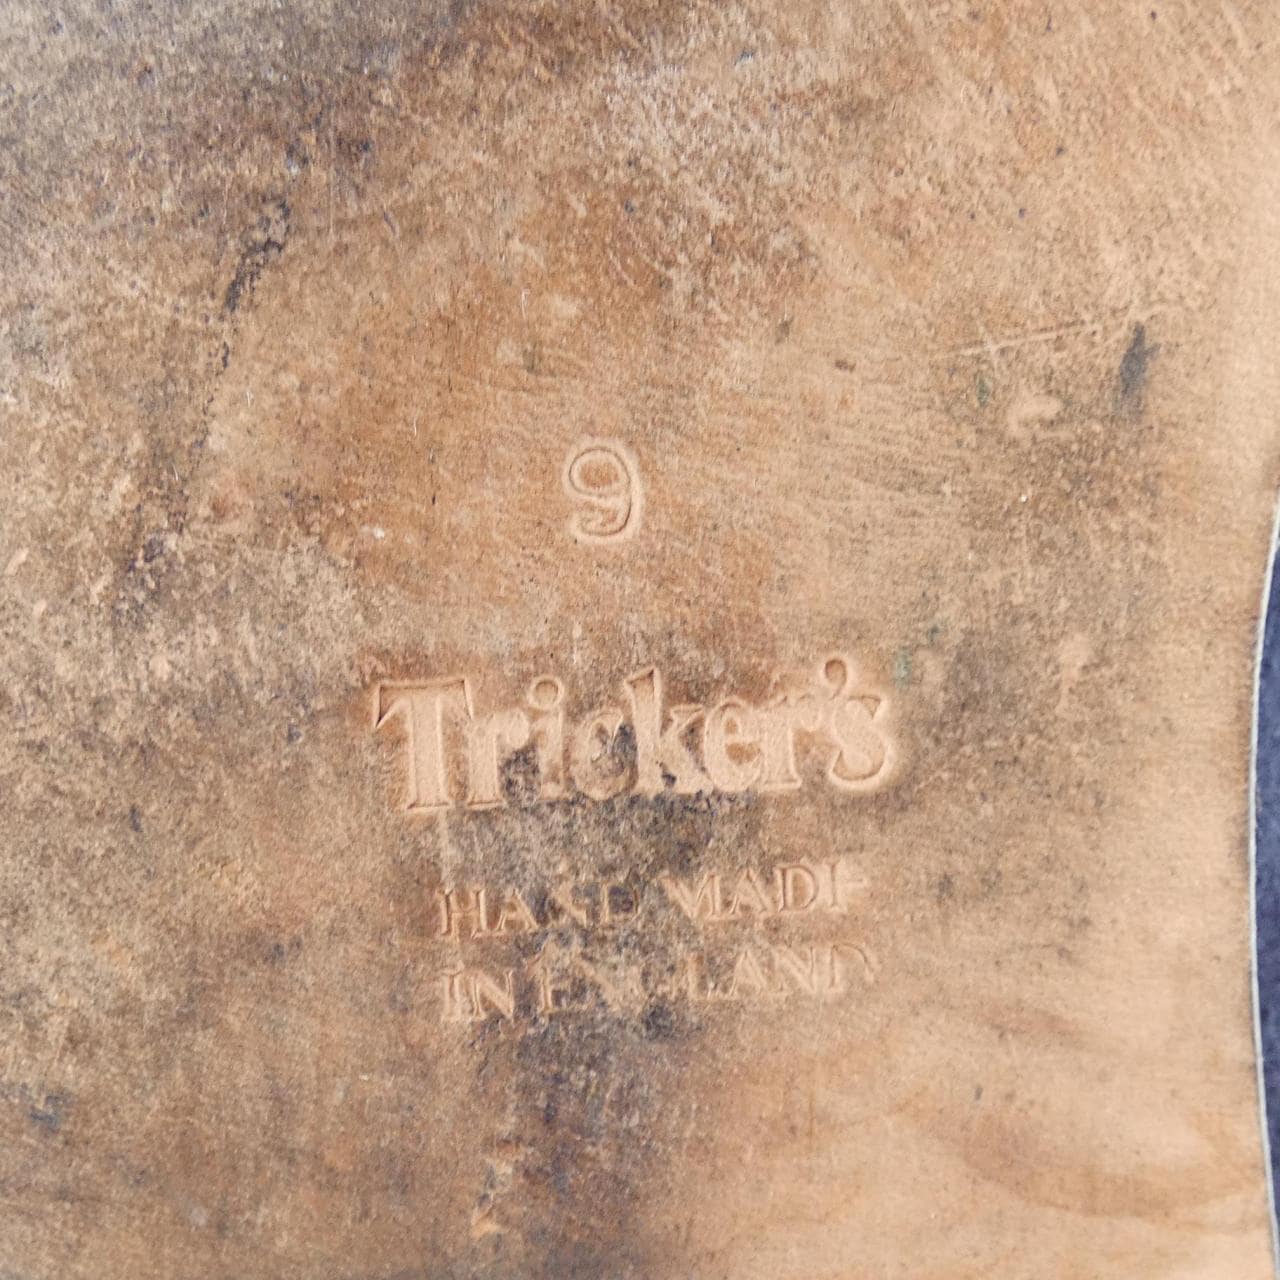 Tricker's Tricker's shoes